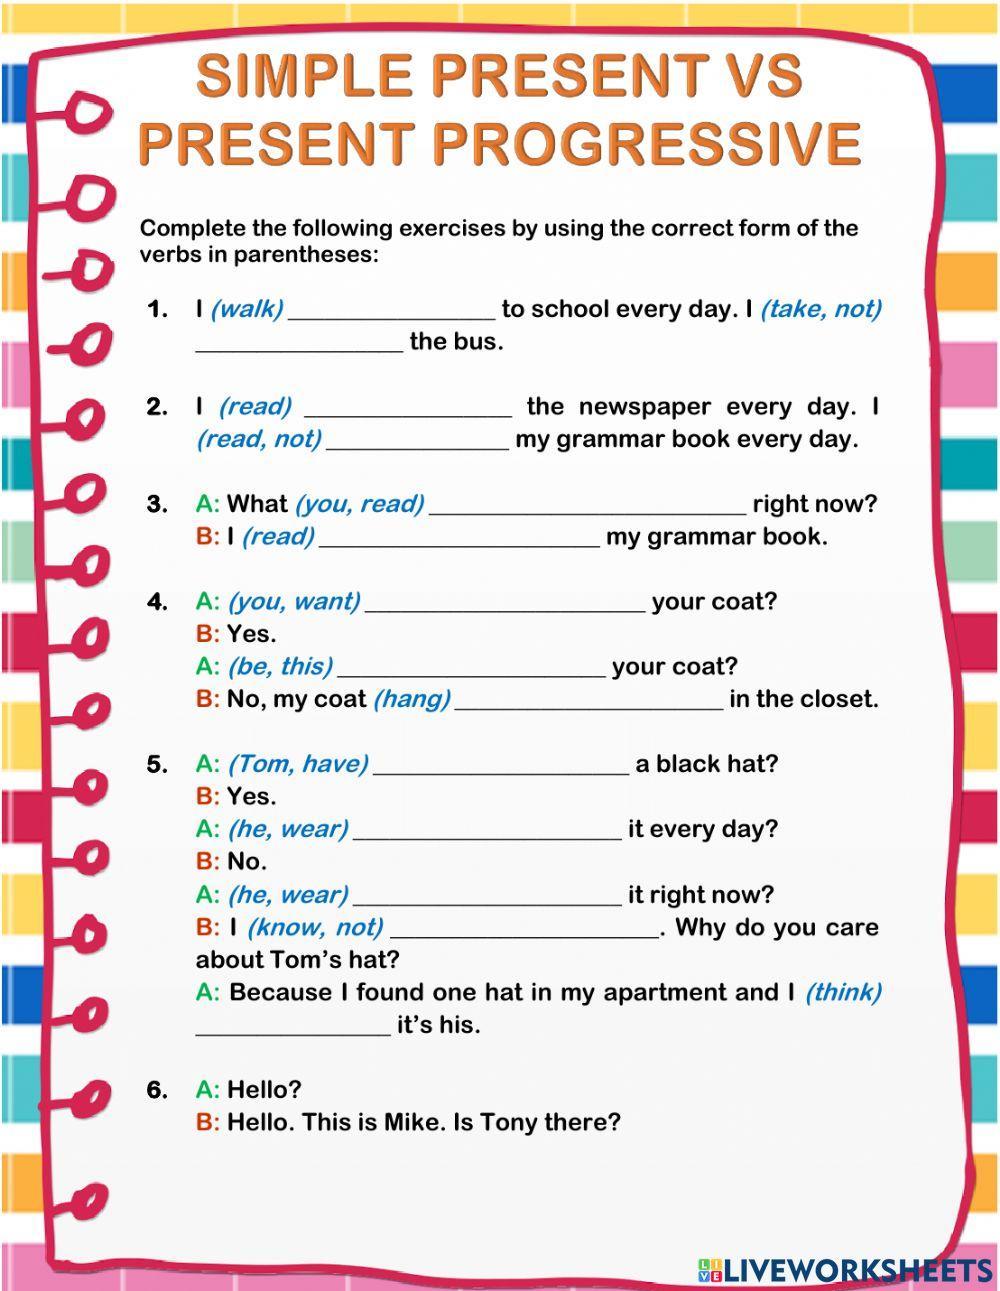 Simple Present vs Present Progressive